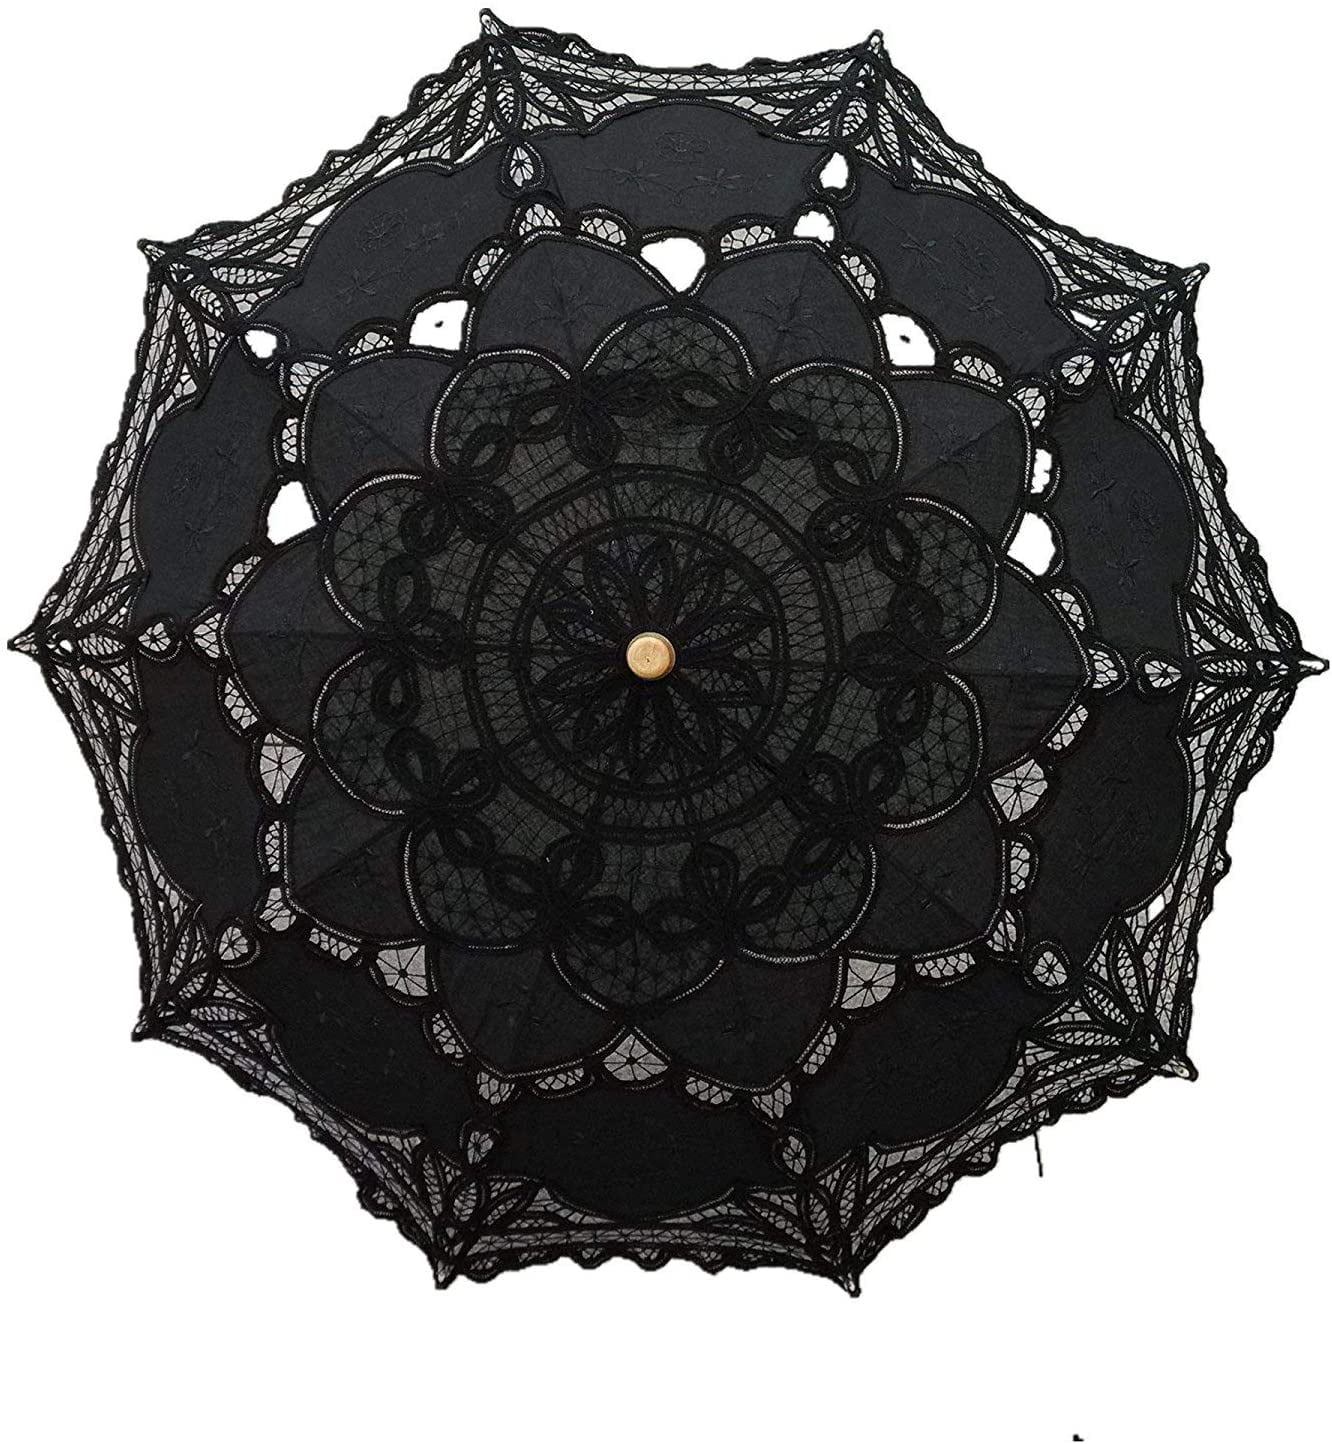 Lace Wedding Umbrella Parasol For Bride Cotton Fashion Wooden Handle Decoration Umbrella Black 